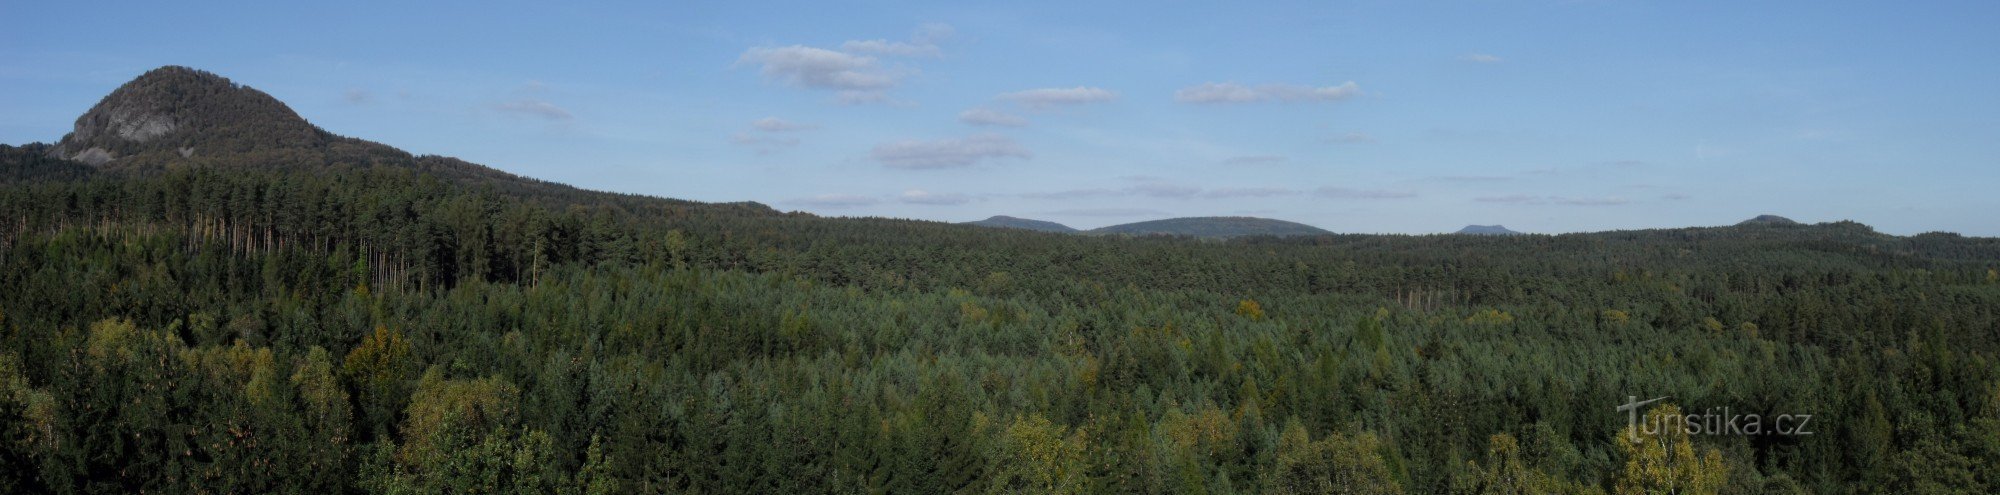 Panorama z Jelení skop